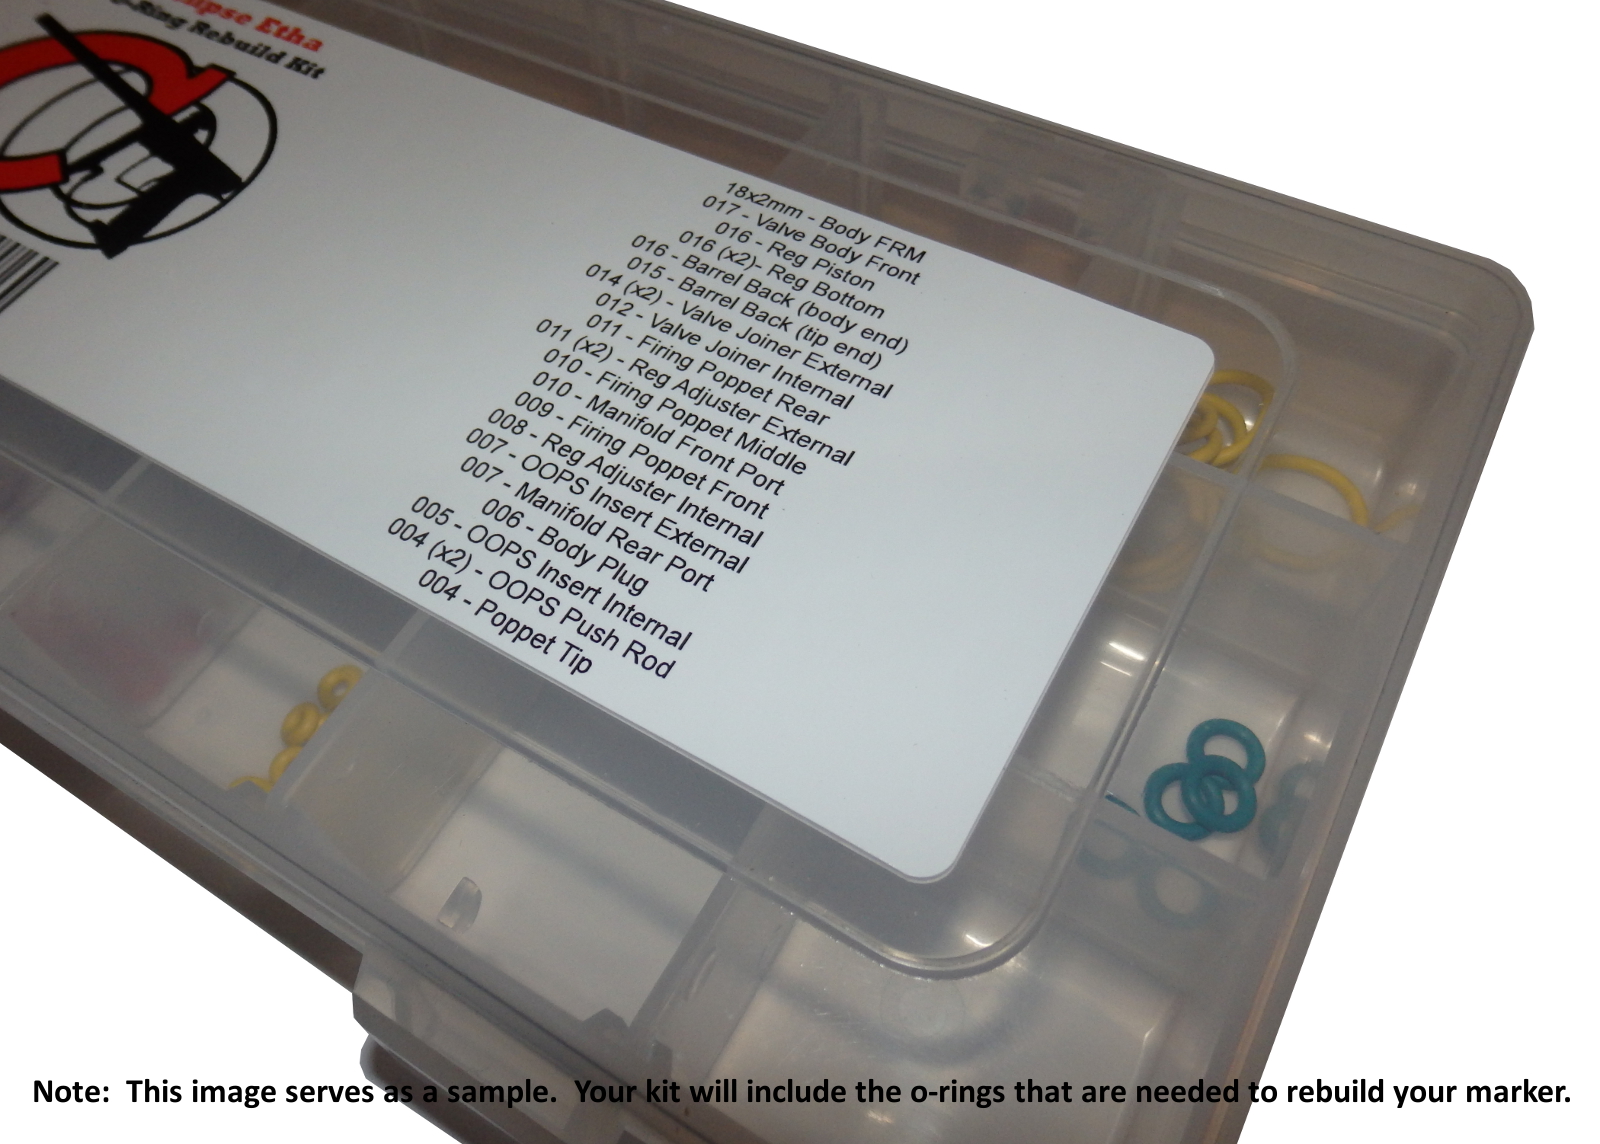 3x Oring Rebuild Kit Bob Long Gen5 Protege/Vice Intimidator 